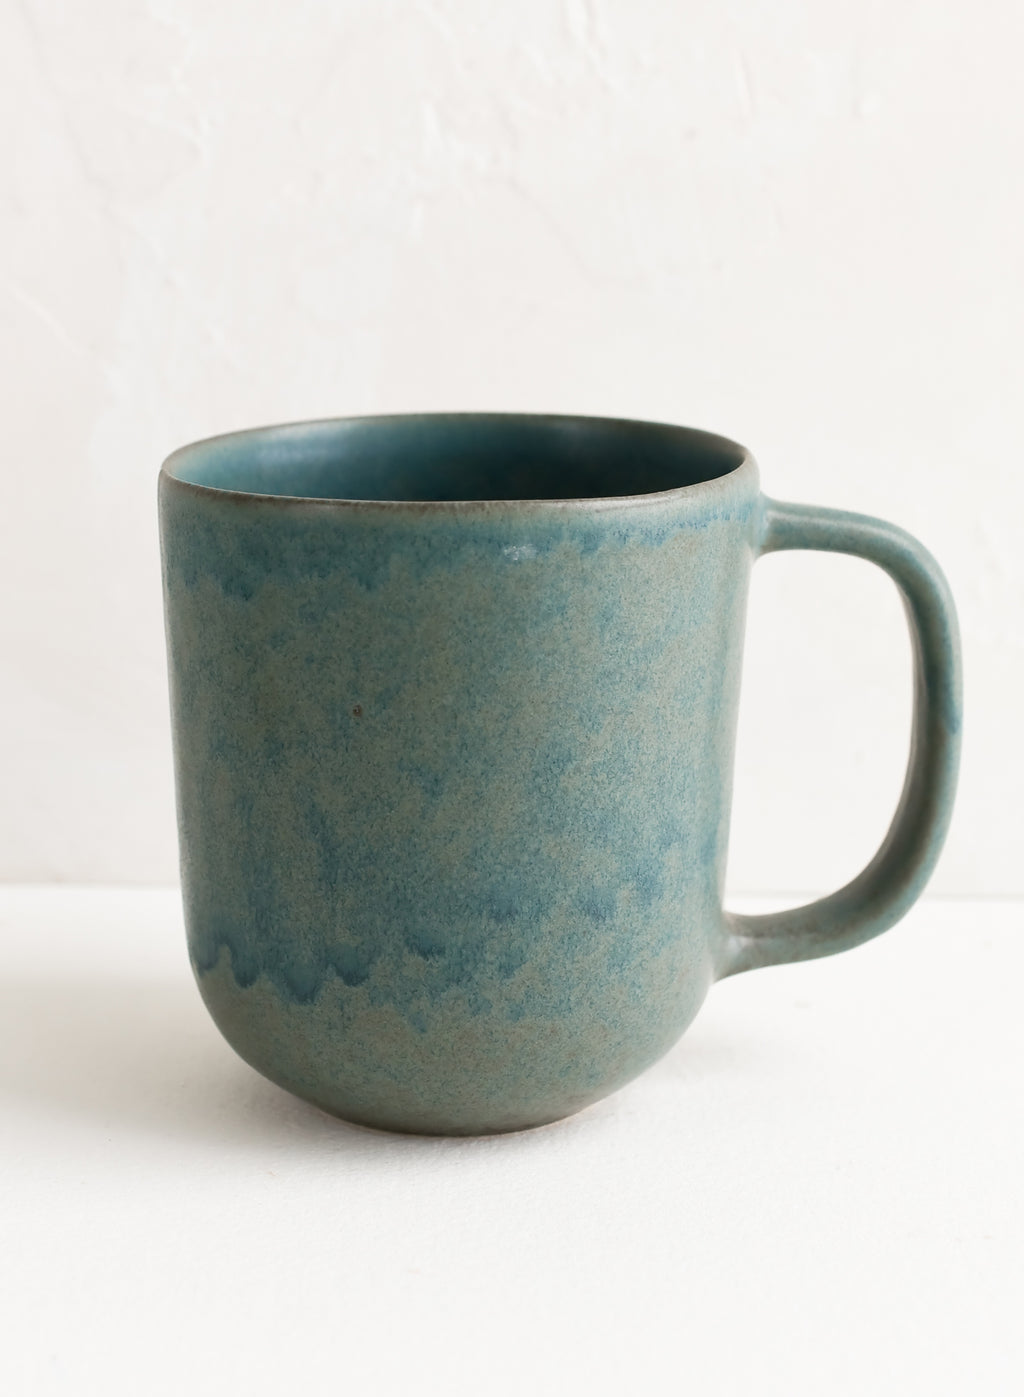 1: A ceramic mug in mottled matte sea blue glaze.